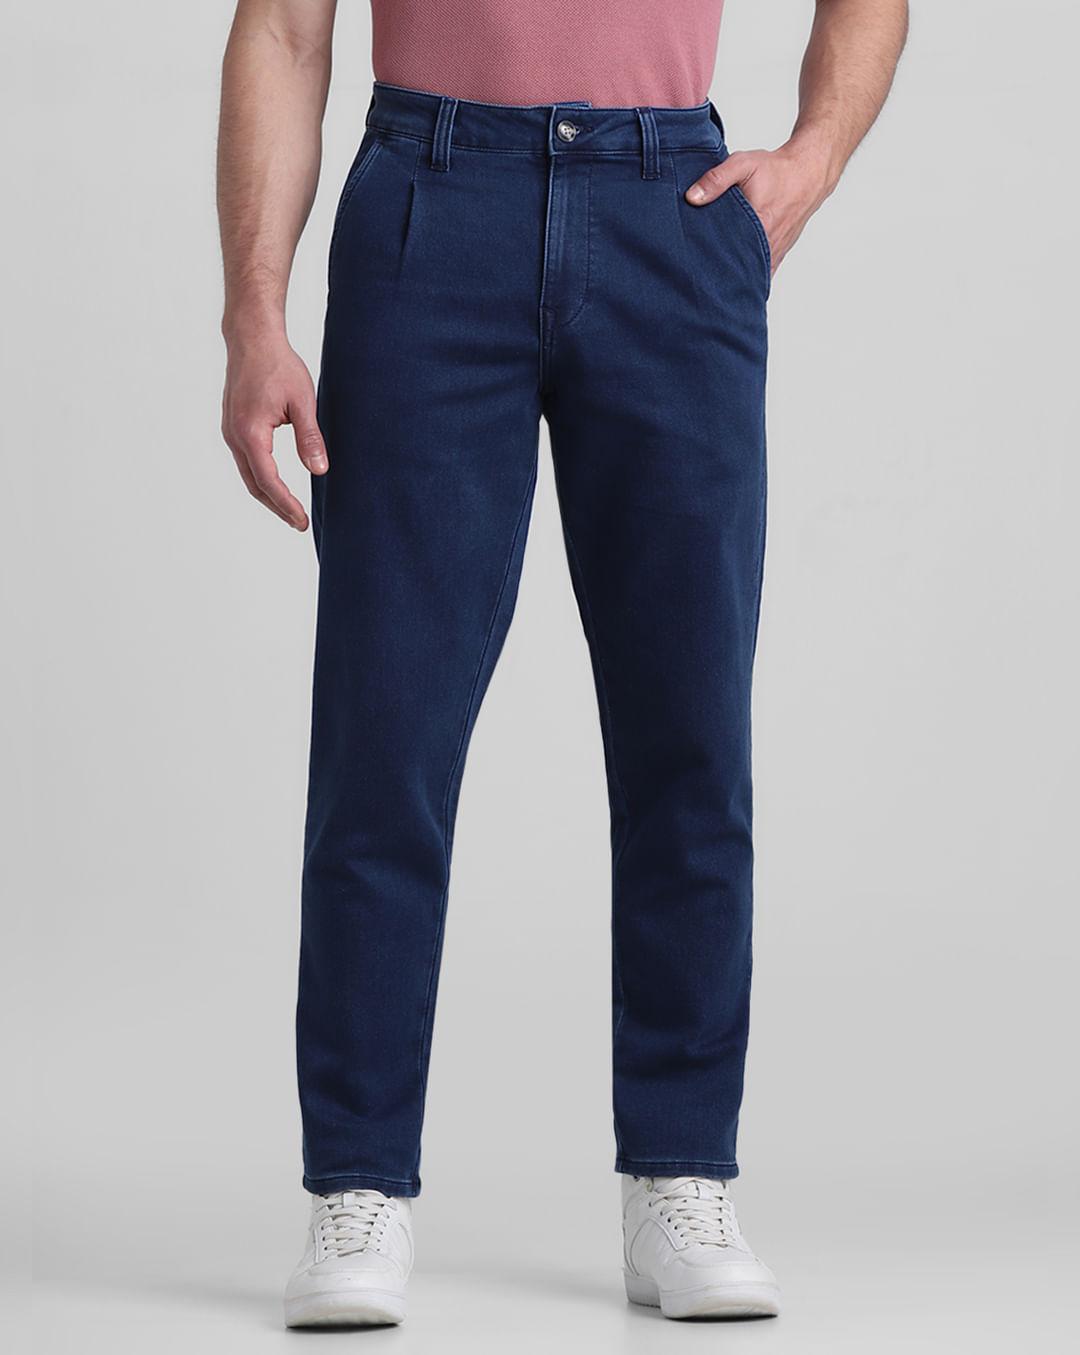 dark-blue-low-rise-knit-anti-fit-jeans